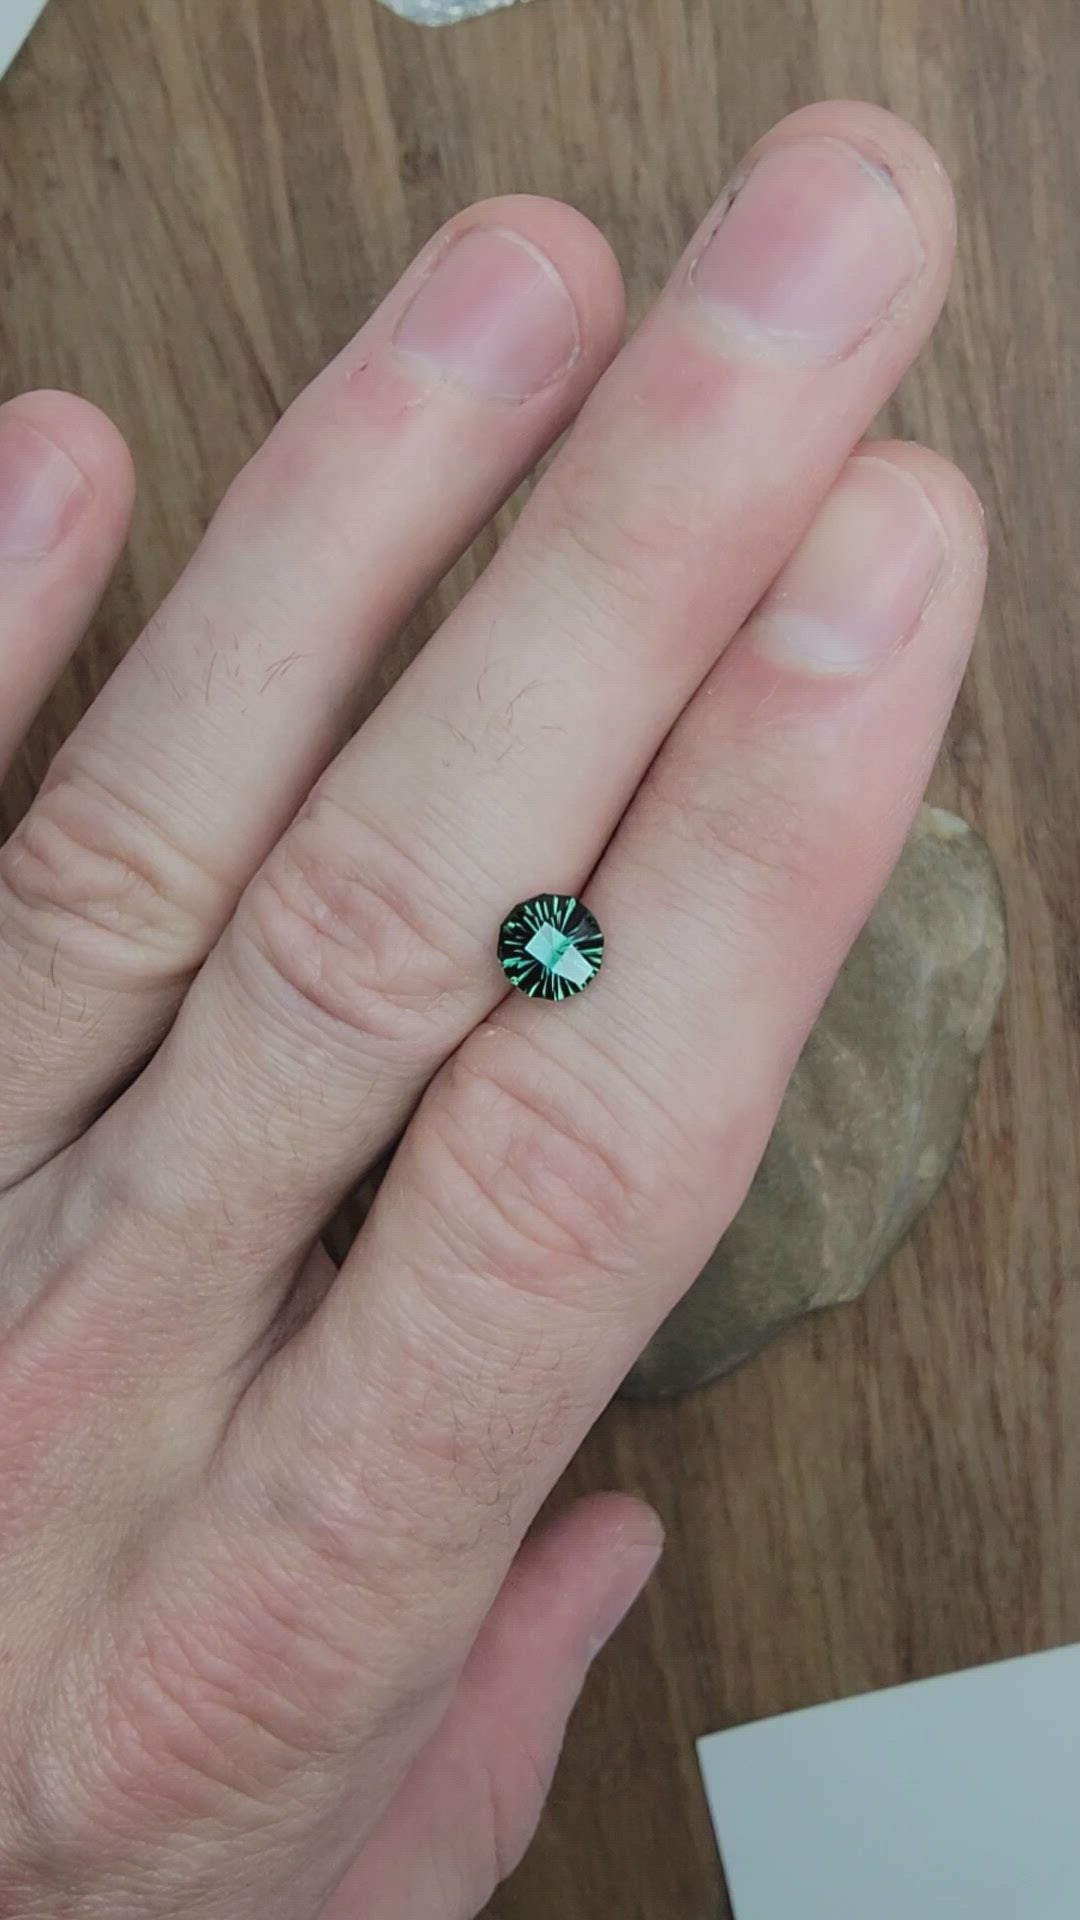 1.68 carat Blue/Green Sapphire Round - Fantasy Cut, 7mm in diameter